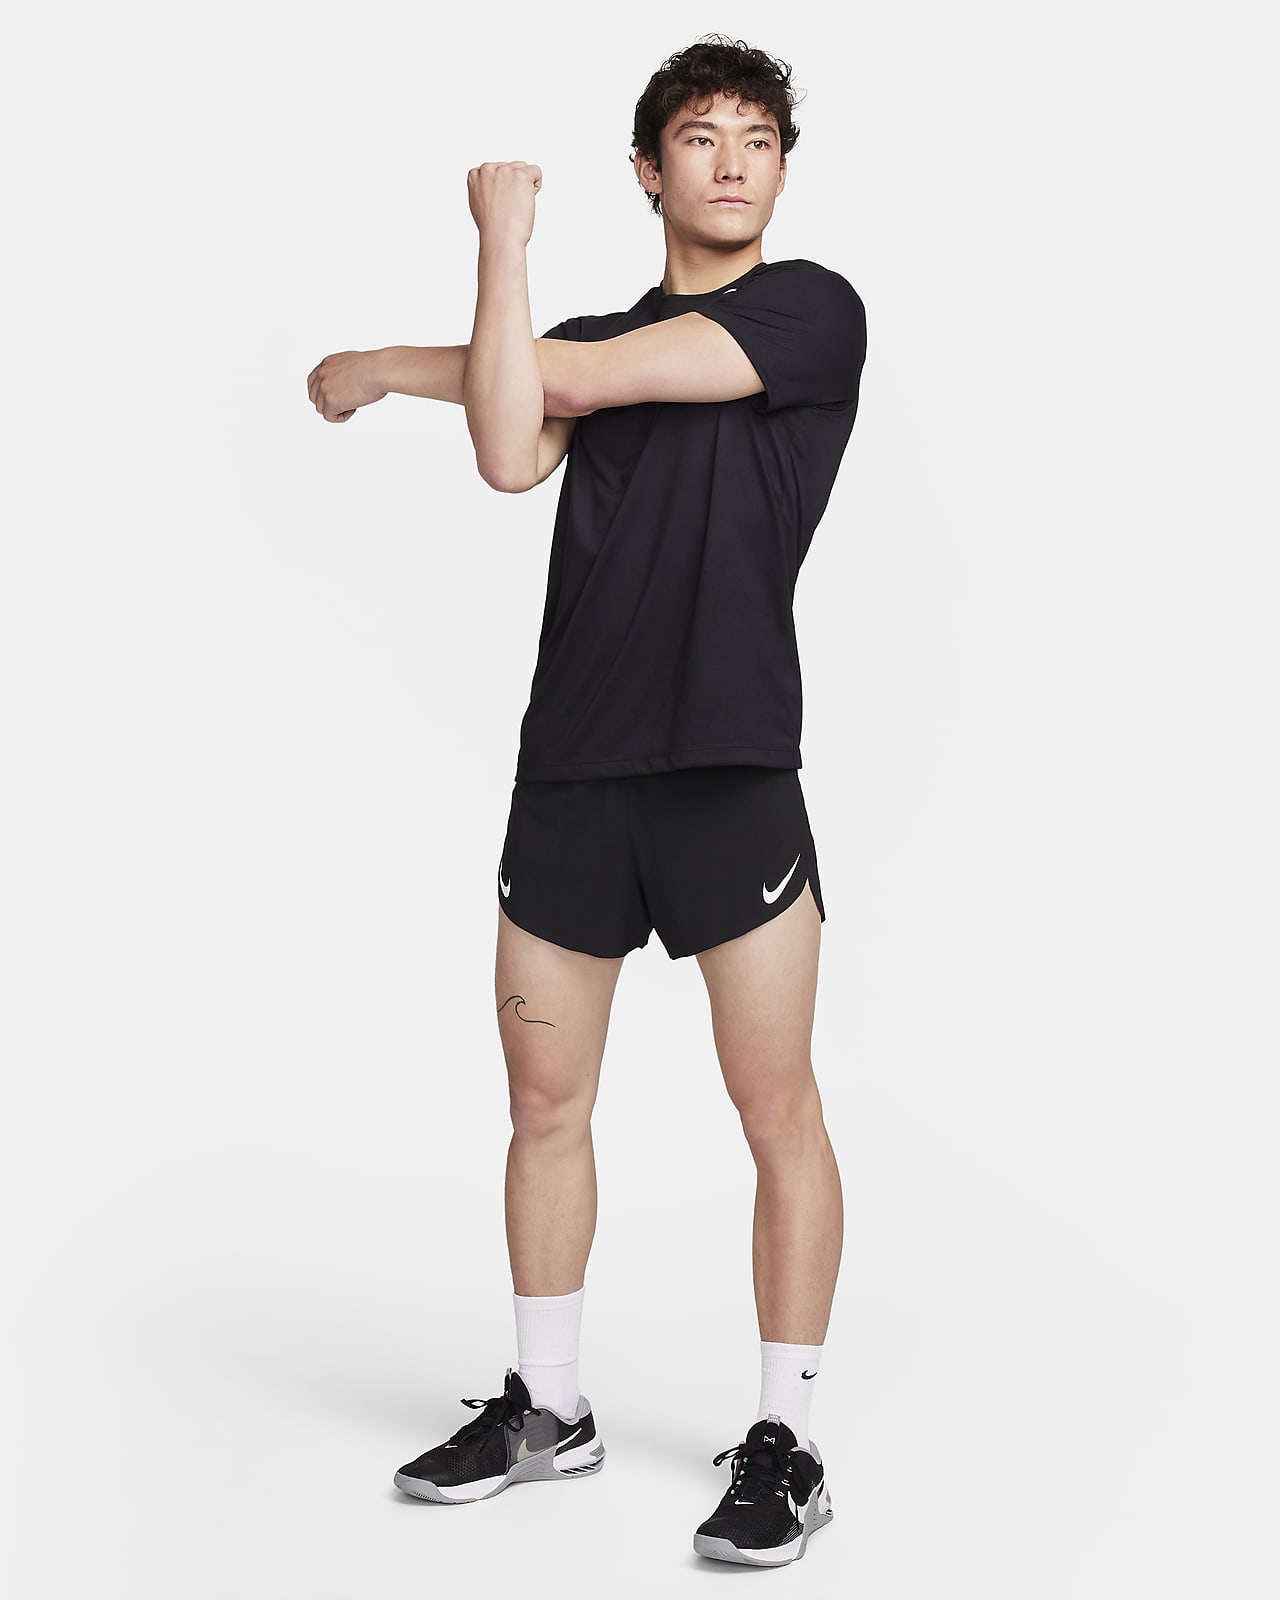 Nike Mens Aeroswift 4 Inch Shorts - Black